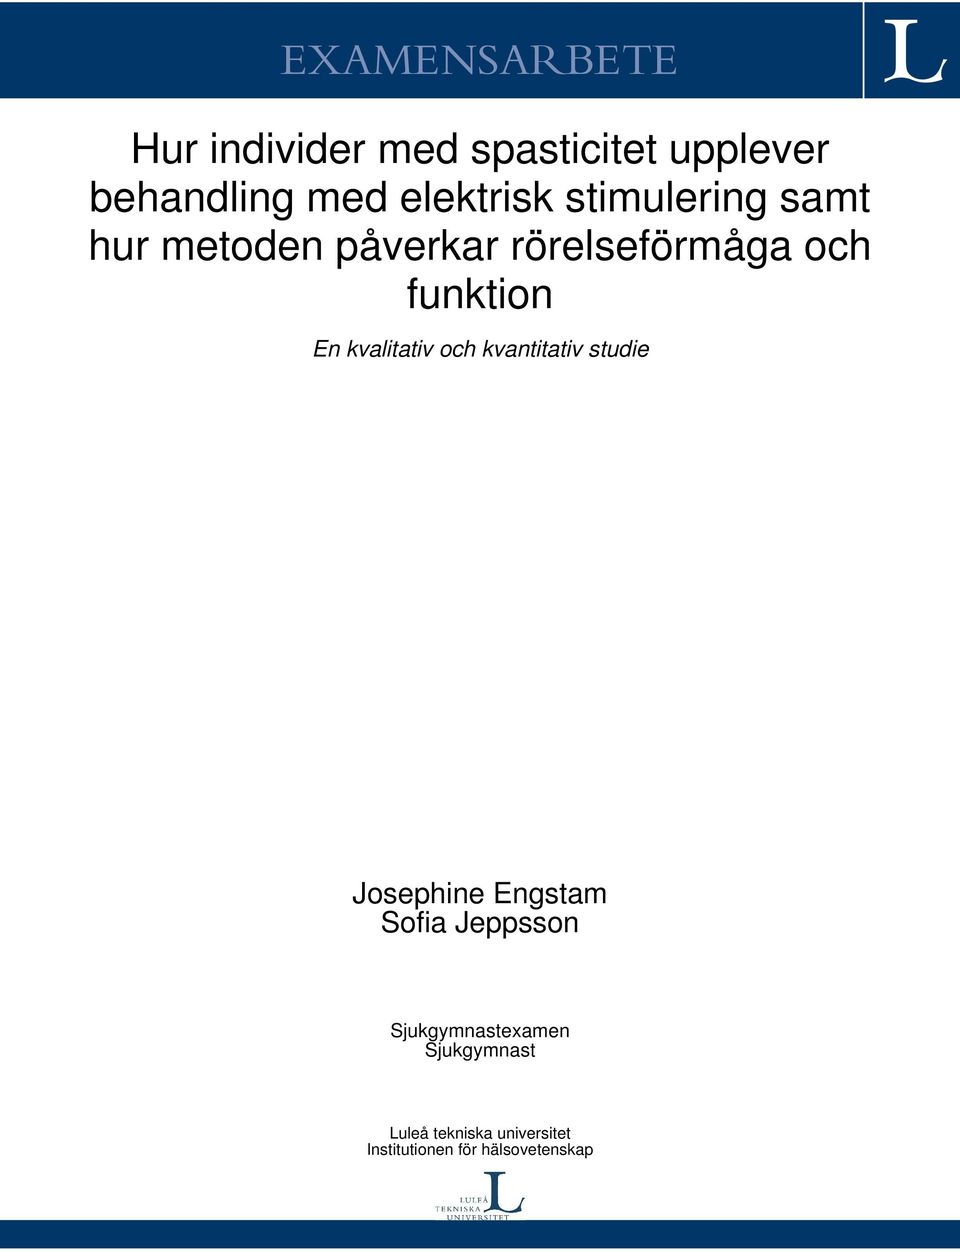 En kvalitativ och kvantitativ studie Josephine Engstam Sofia Jeppsson